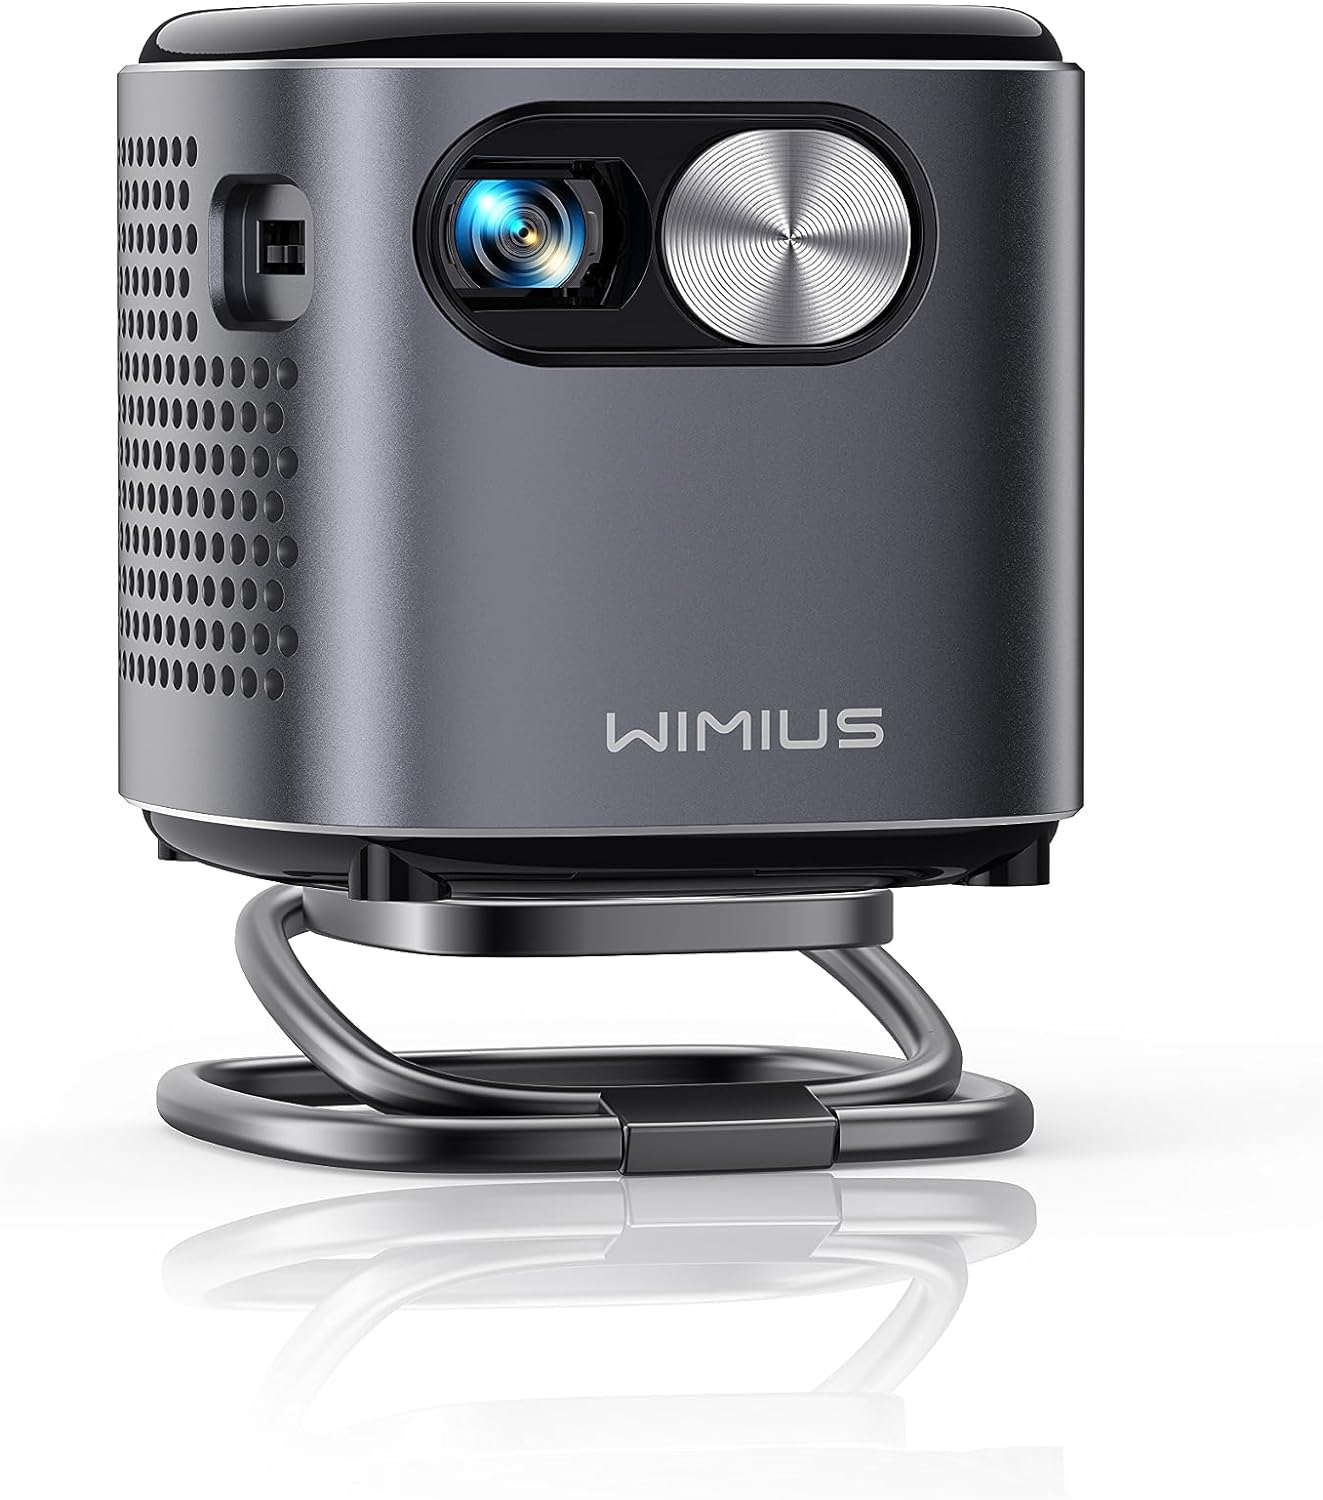 Wimius 2 Ultra Compact - UltravisionWimius 2 Ultra Compact